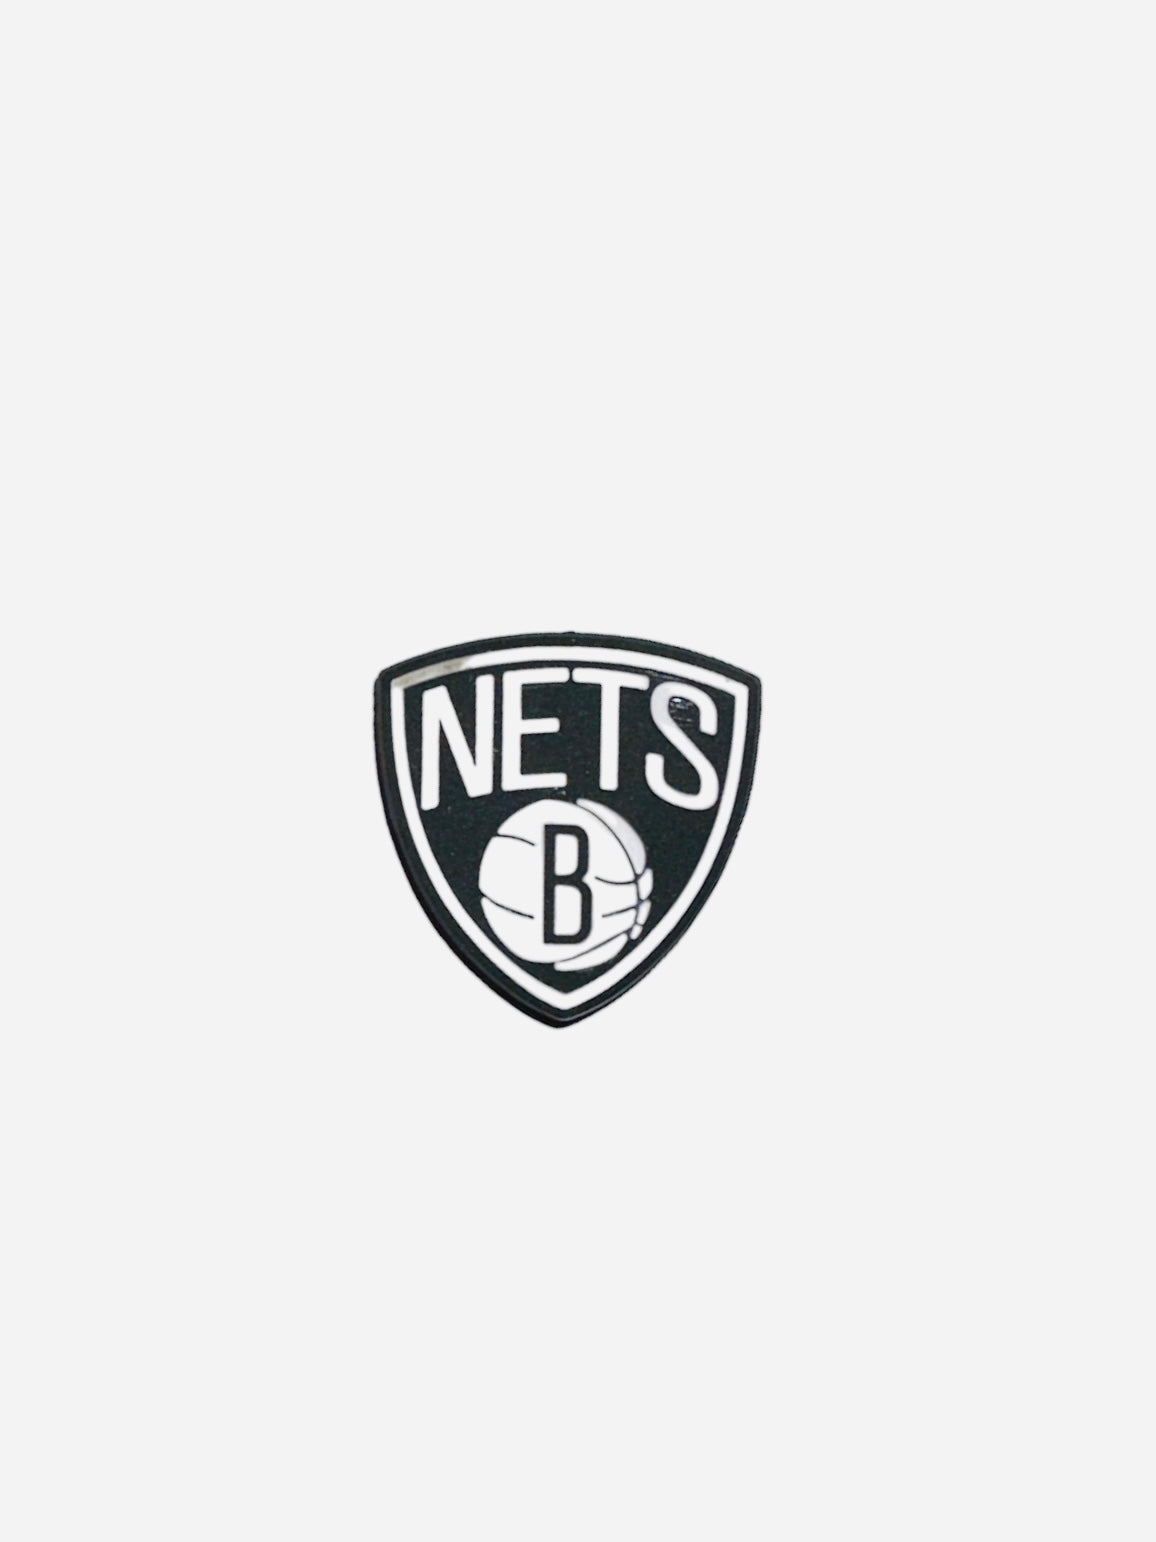 BiTZ - Nets